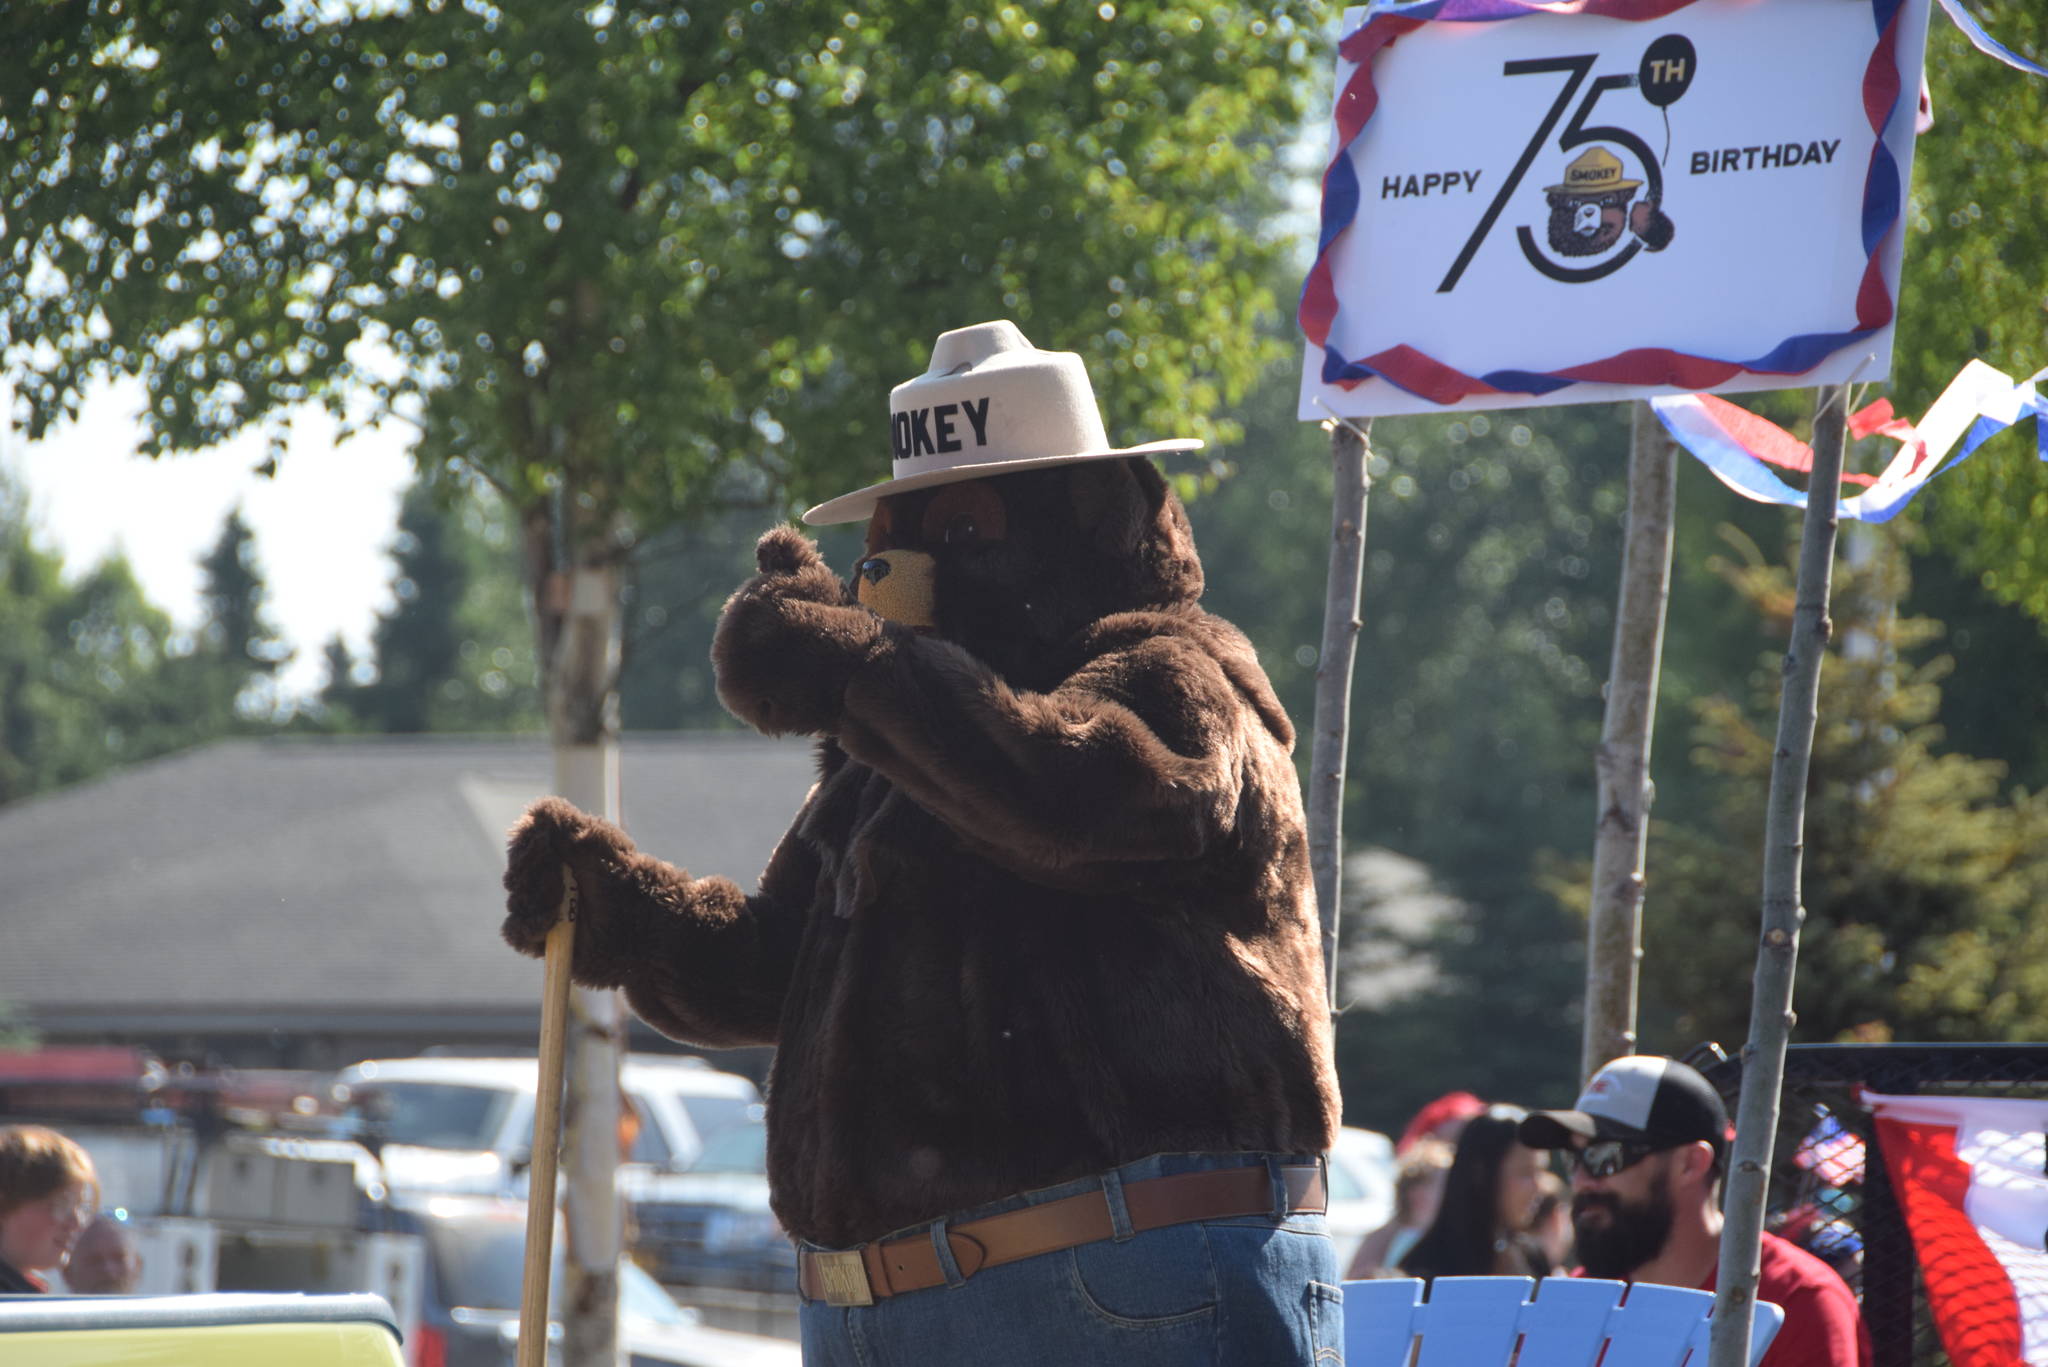 Smokey the Bear celebrates his 75th birthday during the July 4th parade in Kenai, Alaska. (Photo by Brian Mazurek/Peninsula Clarion)